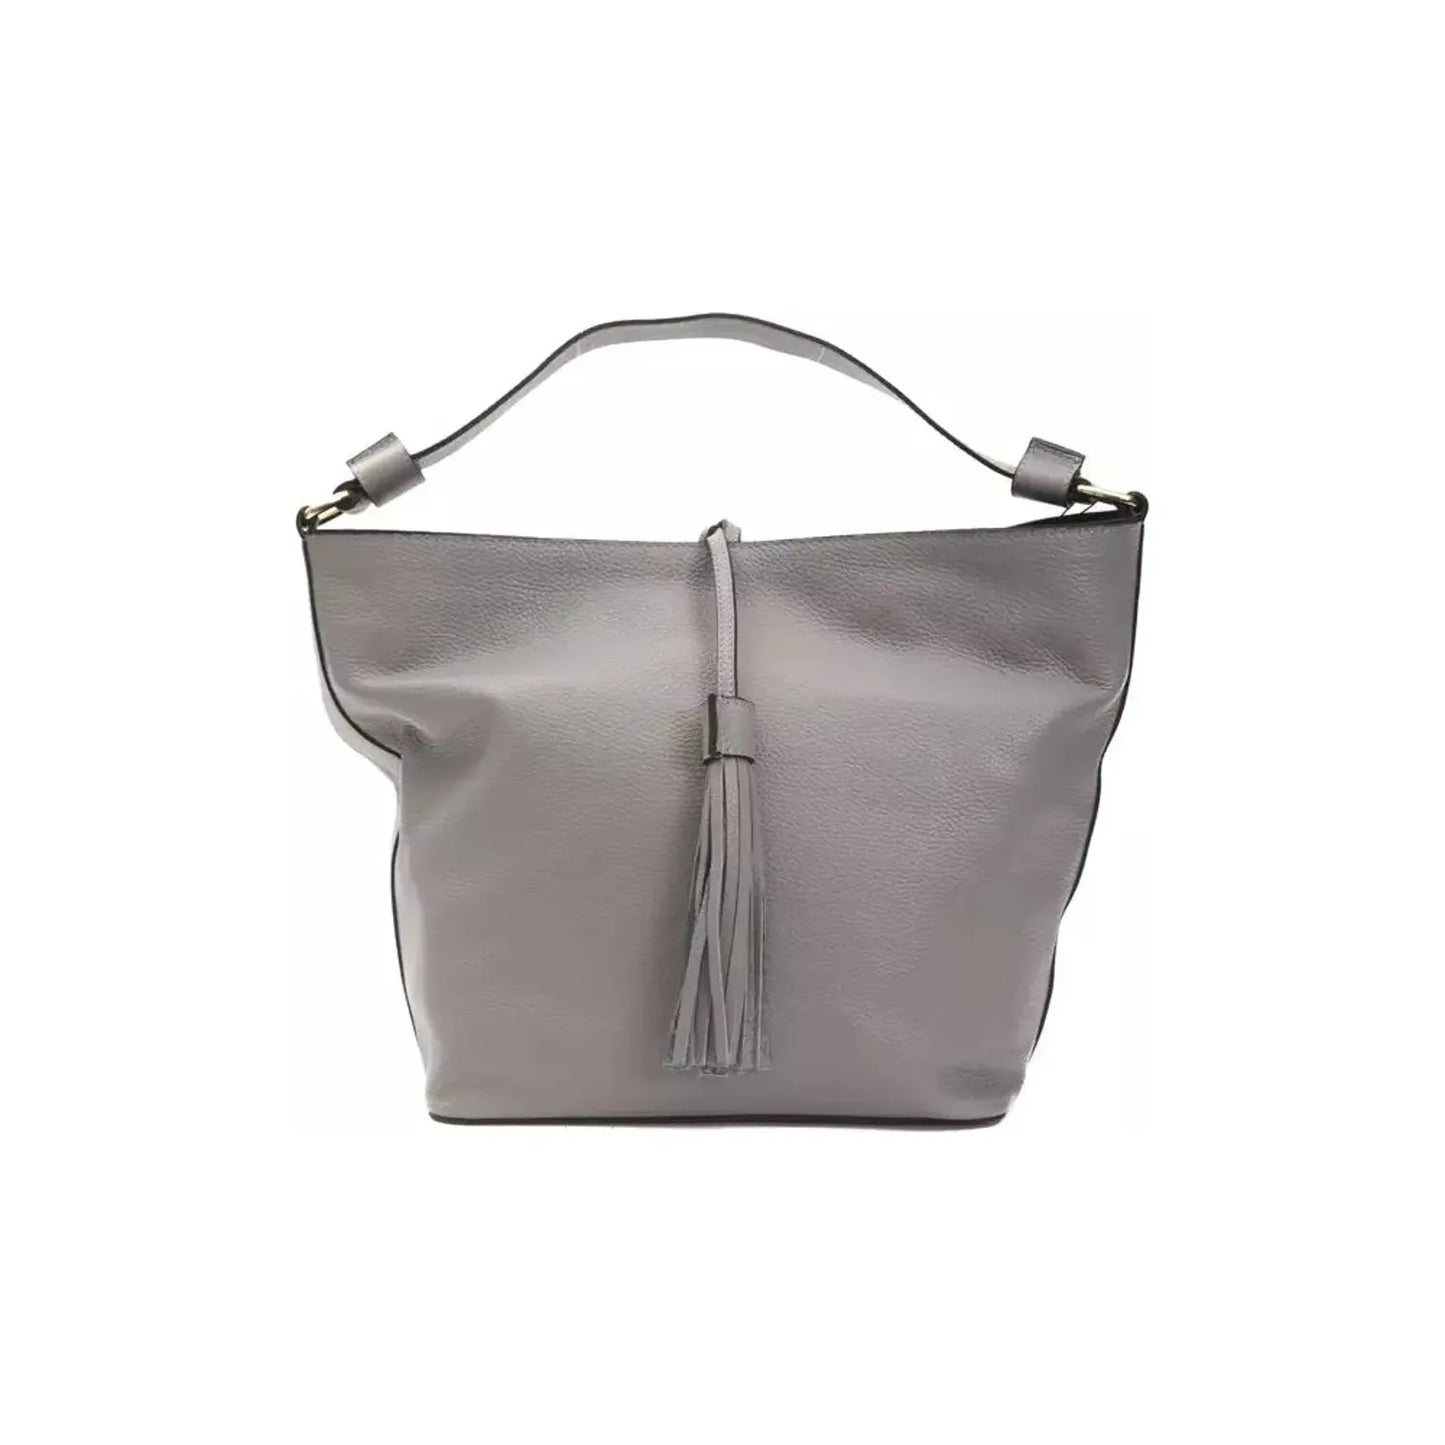 Pompei Donatella Chic Gray Leather Shoulder Bag - Adjustable Strap gray-leather-shoulder-bag-1 WOMAN SHOULDER BAGS stock_product_image_5805_2014242297-24-60a50a09-873.webp